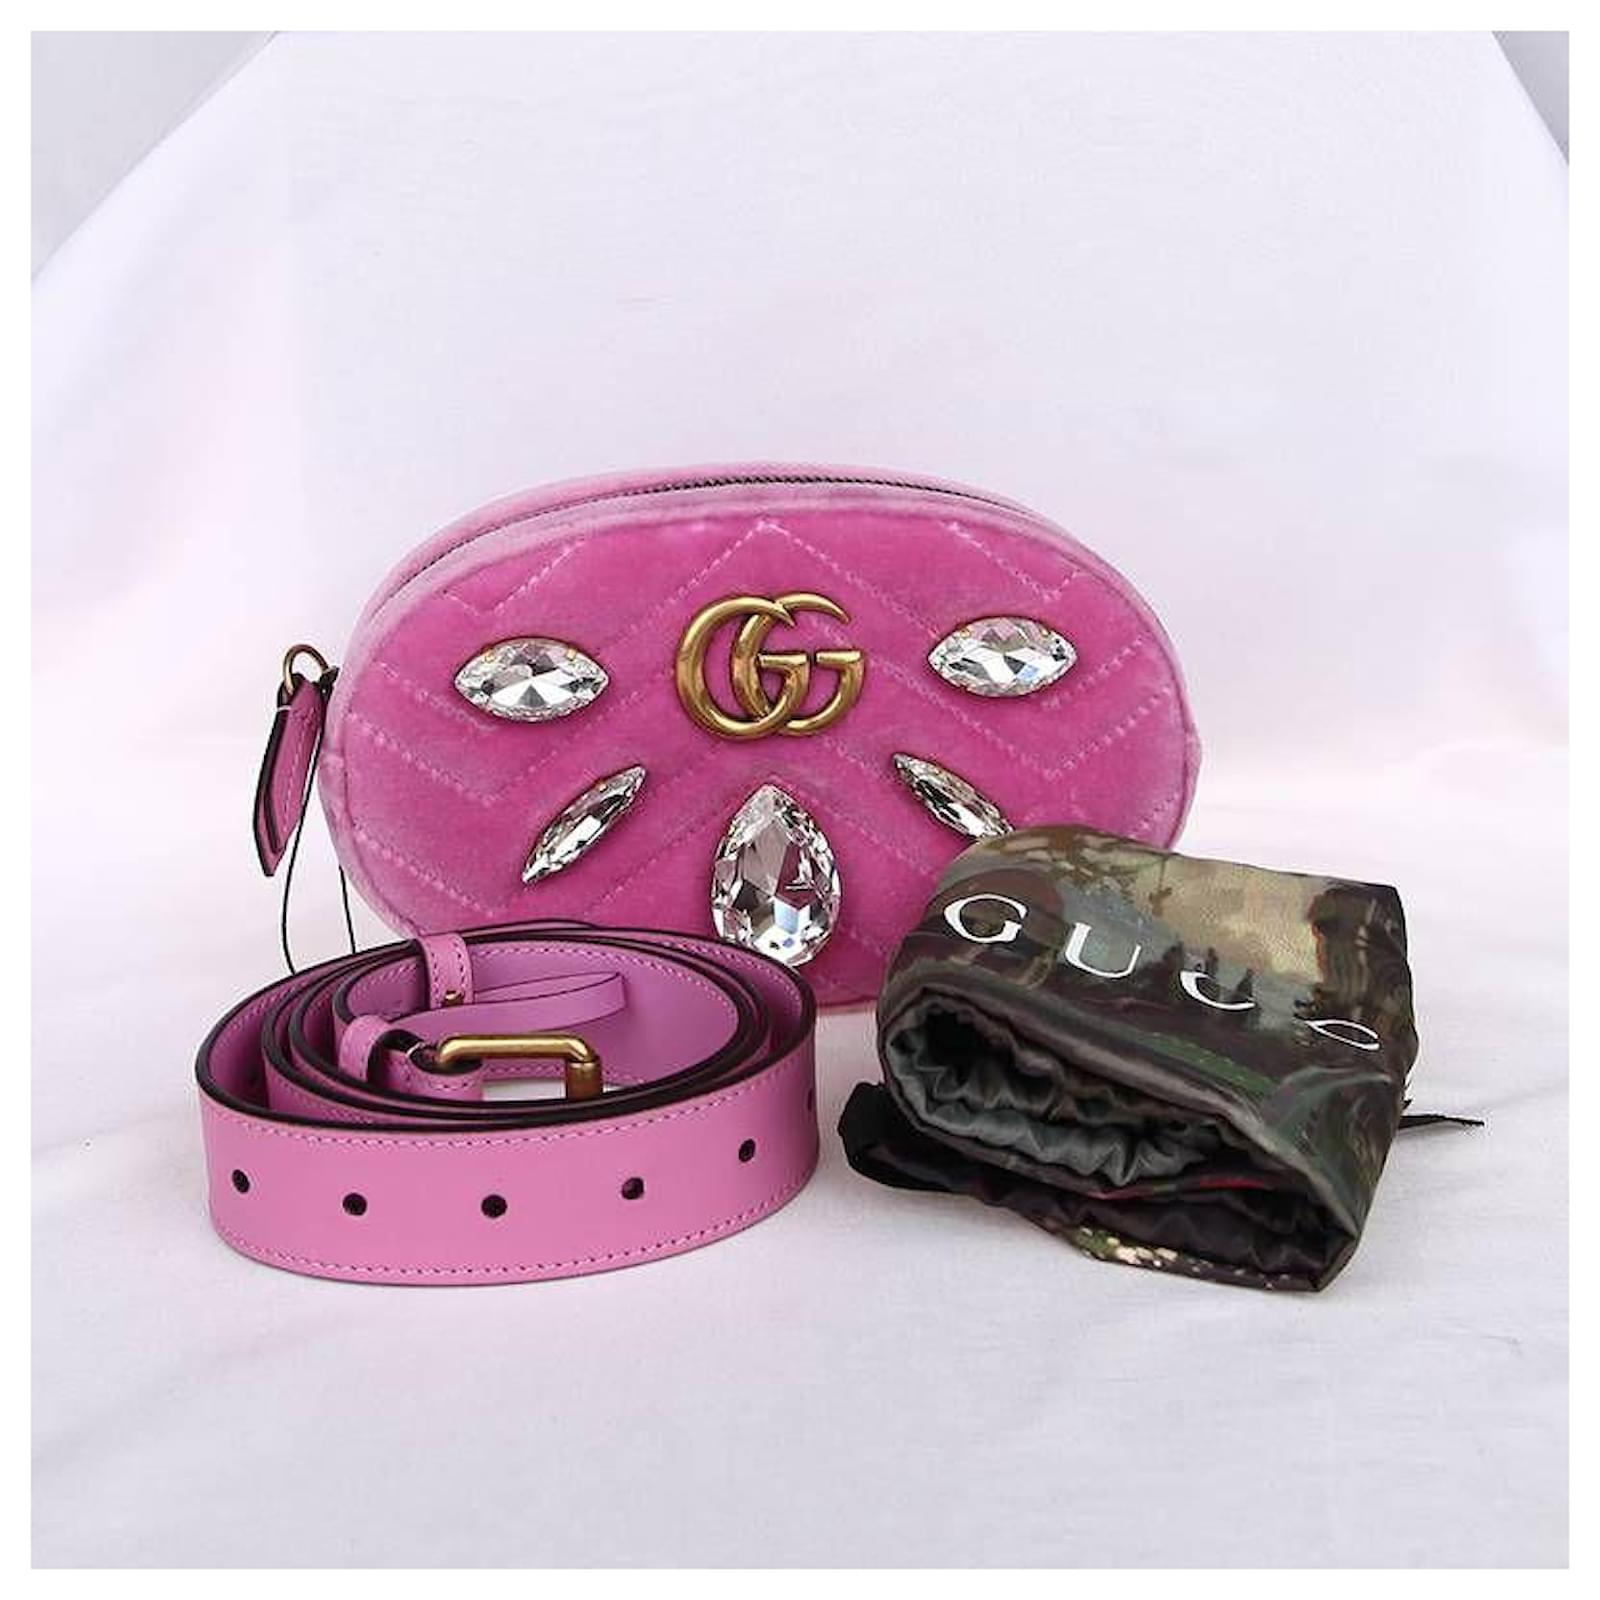 Gucci Marmont Belt Bag Pink Velvet With Crystals